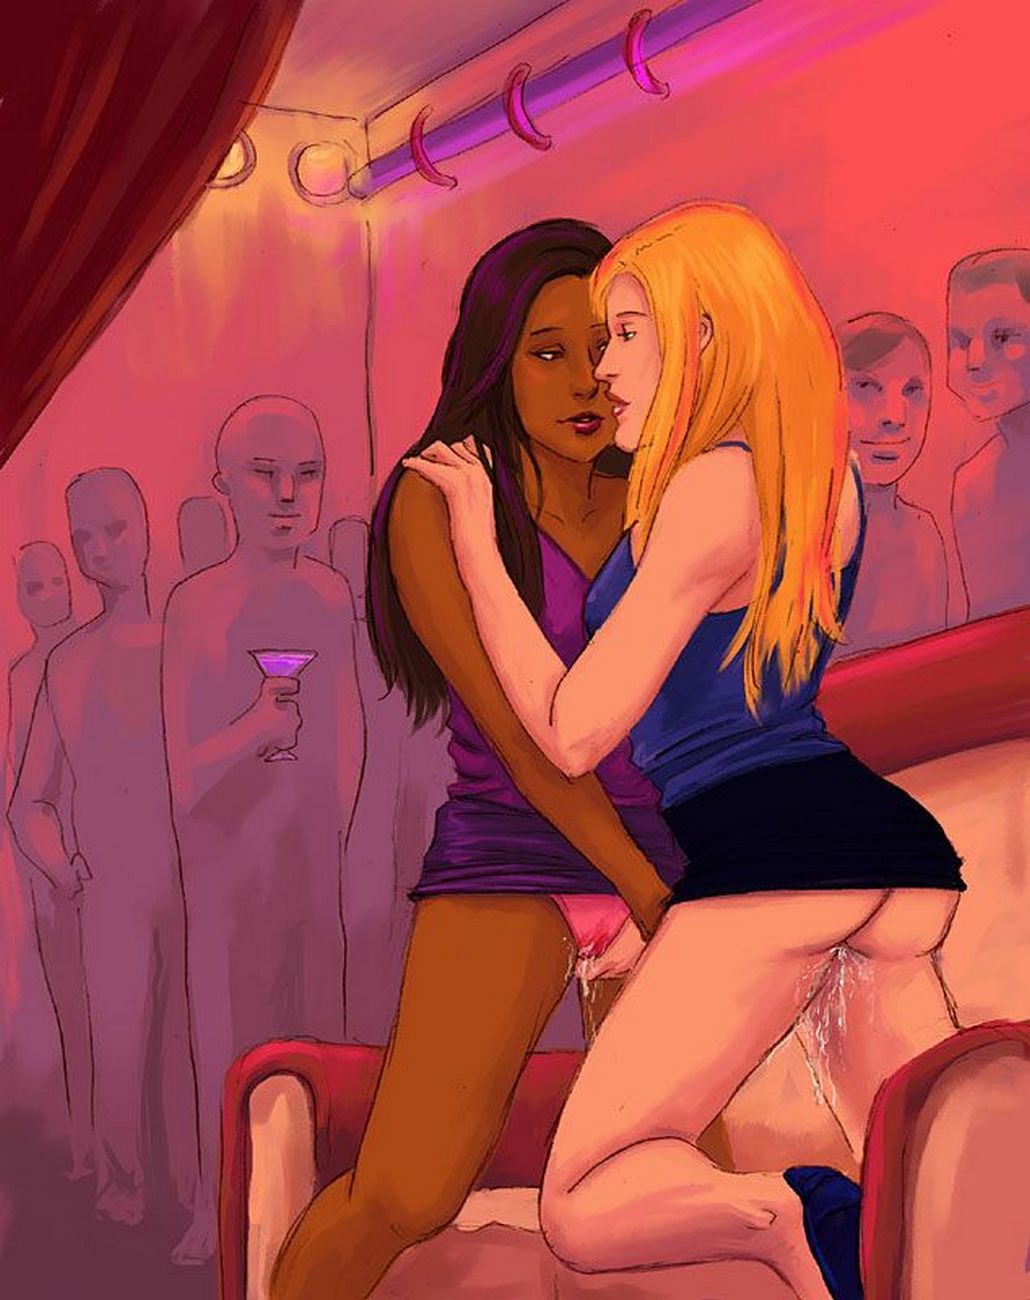 Ssxsex - Girls Night Out comic porn - HD Porn Comics